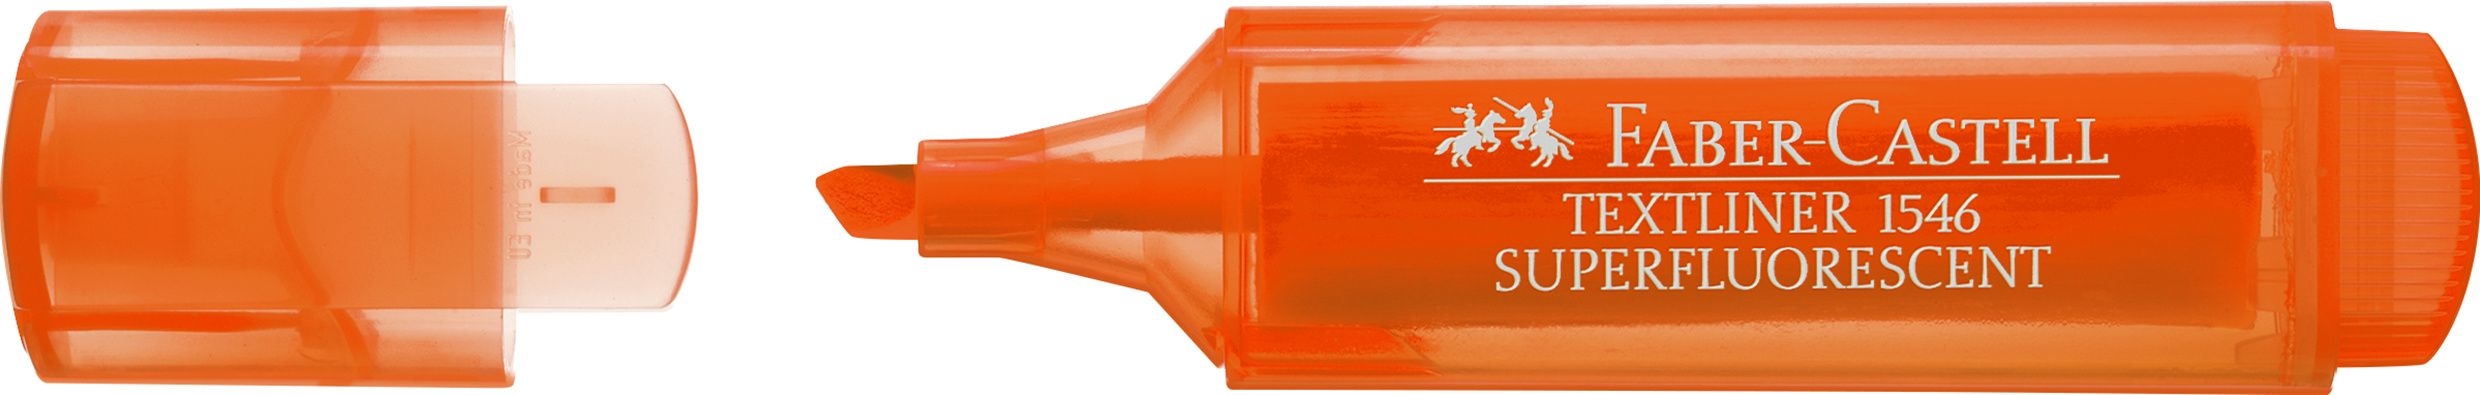 FABER-CASTELL Textmarker TL 46 Superfluor 154615 orange orange